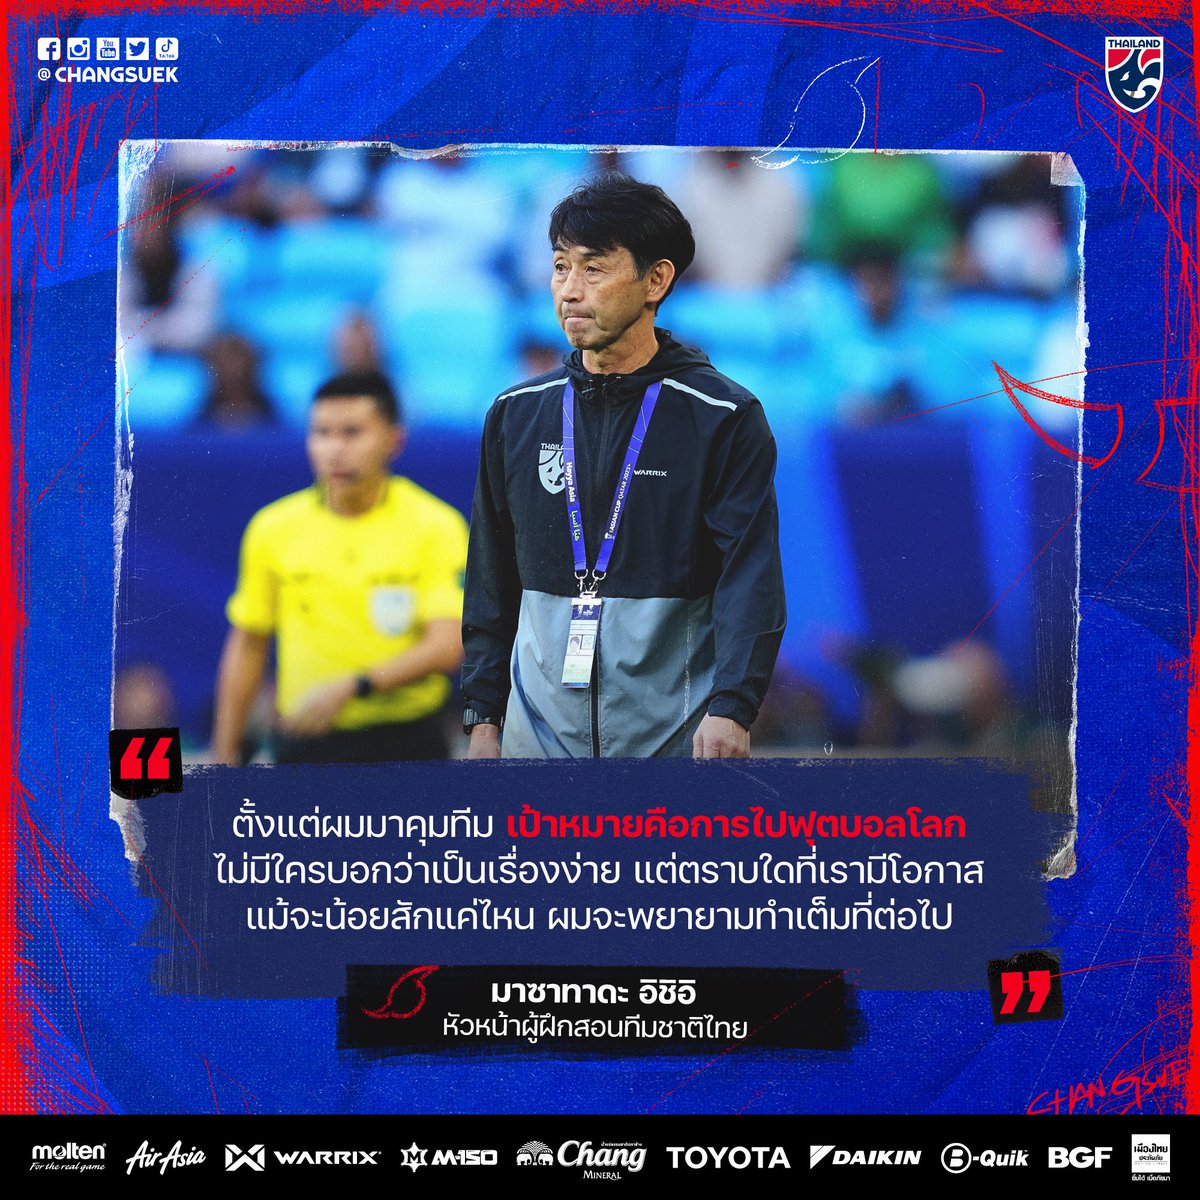 #ChangsuekInterview มาซาทาดะ #อิชิอิ: 💬 “ฟุตบอลไทย ต้องร่วมมือกันเพื่อเป้าหมายในการไปฟุตบอลโลก” เฮดโค้ชช้างศึก ให้สัมภาษณ์เกี่ยวกับเป้าหมายในการพา #ช้างศึก ไปฟุตบอลโลก ติดตามบทสัมภาษณ์ได้ทาง: facebook.com/photo/?fbid=97… #เชียร์สุดใจไทยแลนด์ #ช้างศึก #2026WCQ #AsianQualifiers